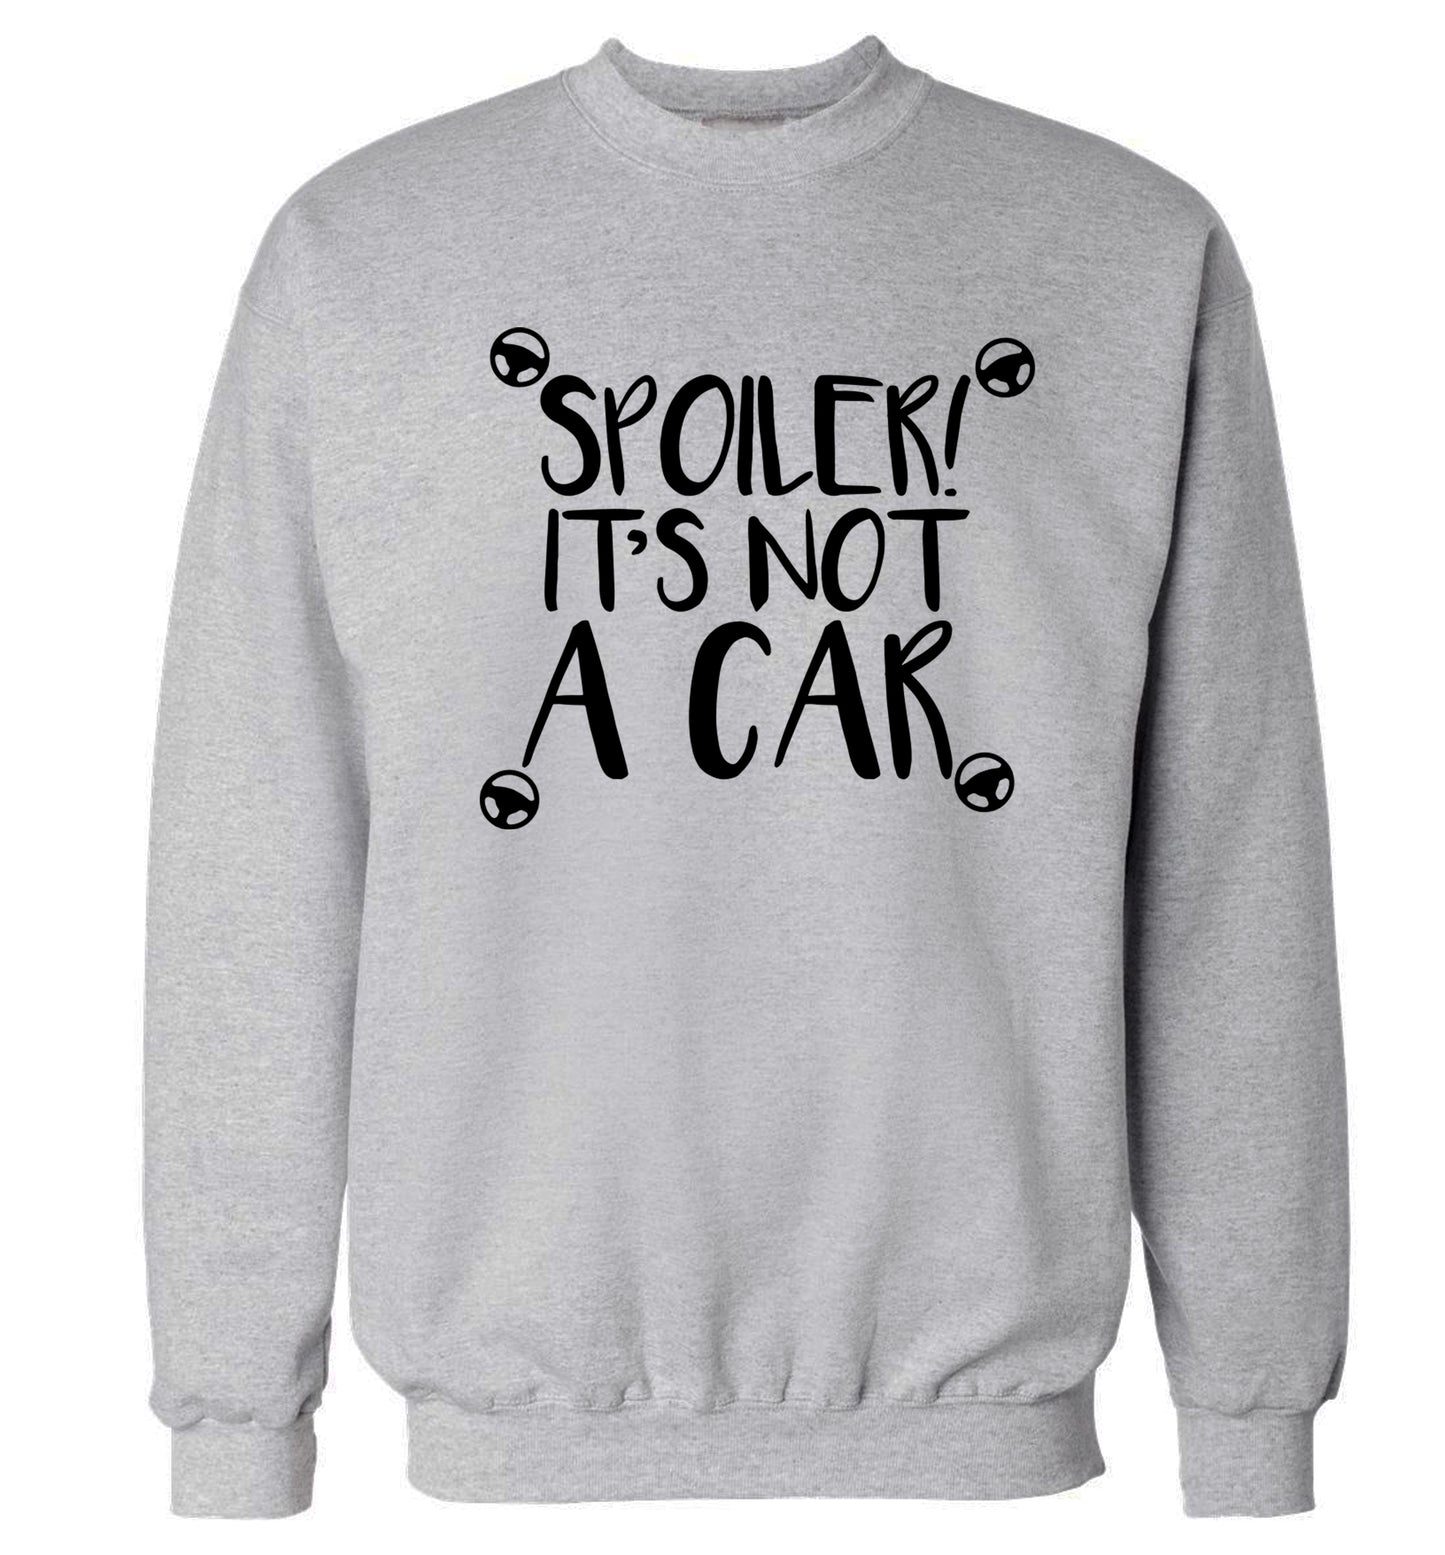 Spoiler it's not a car Adult's unisex grey Sweater 2XL